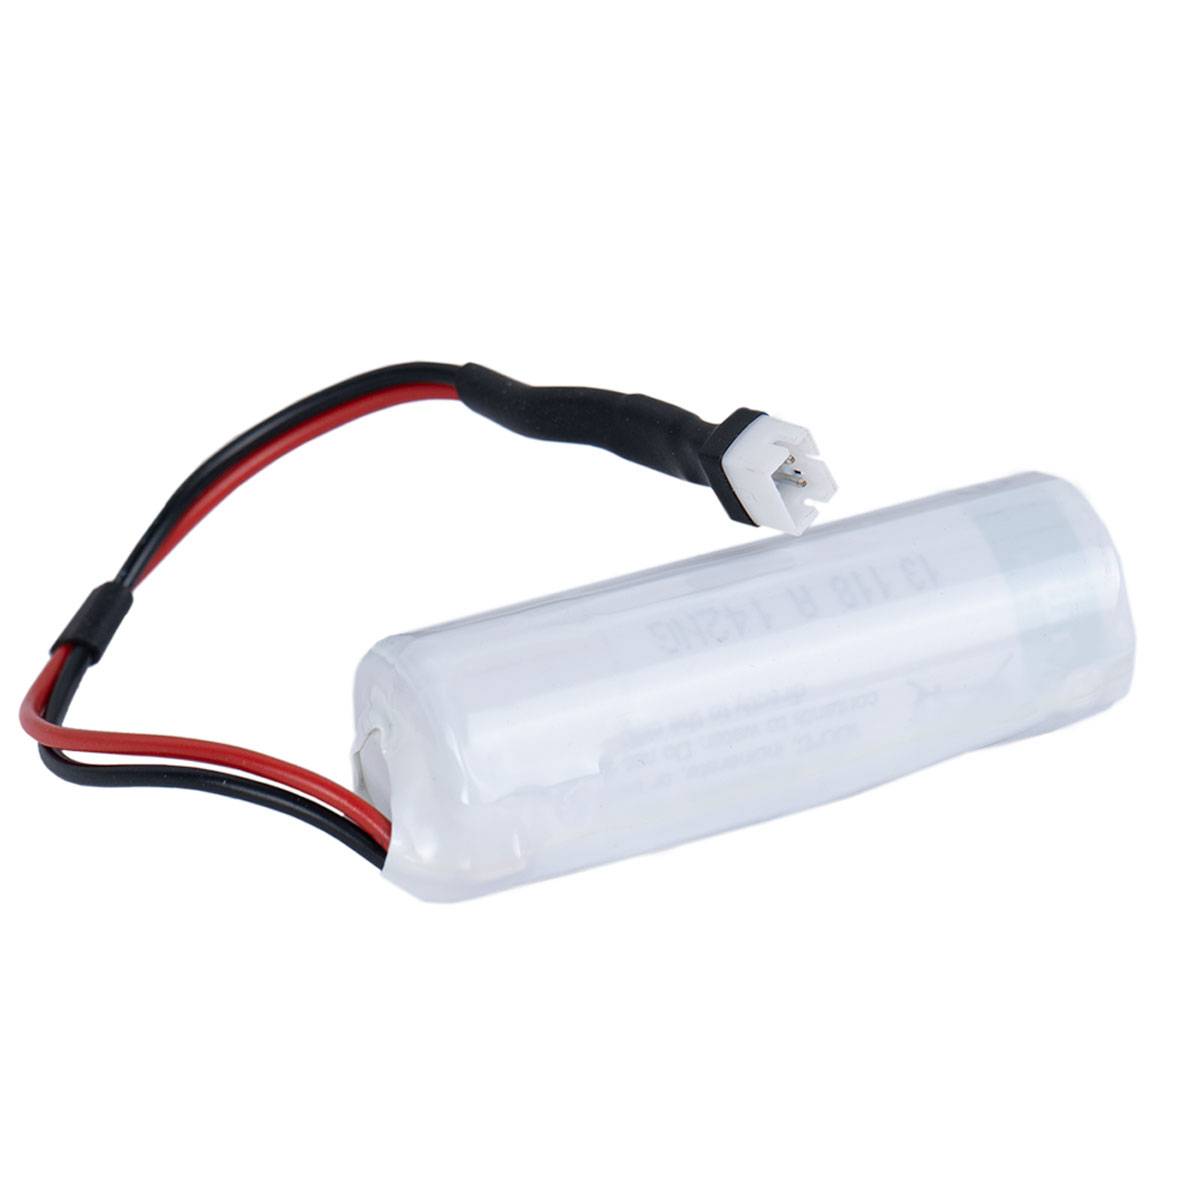 Batteriepack Saft LS17500 Lithium Batterie 3,6V 3,6Ah + 100mm Kabel+Stecker  JST RM 2,5 mm (2-polig), Batterie packs, Akkus & Batterien